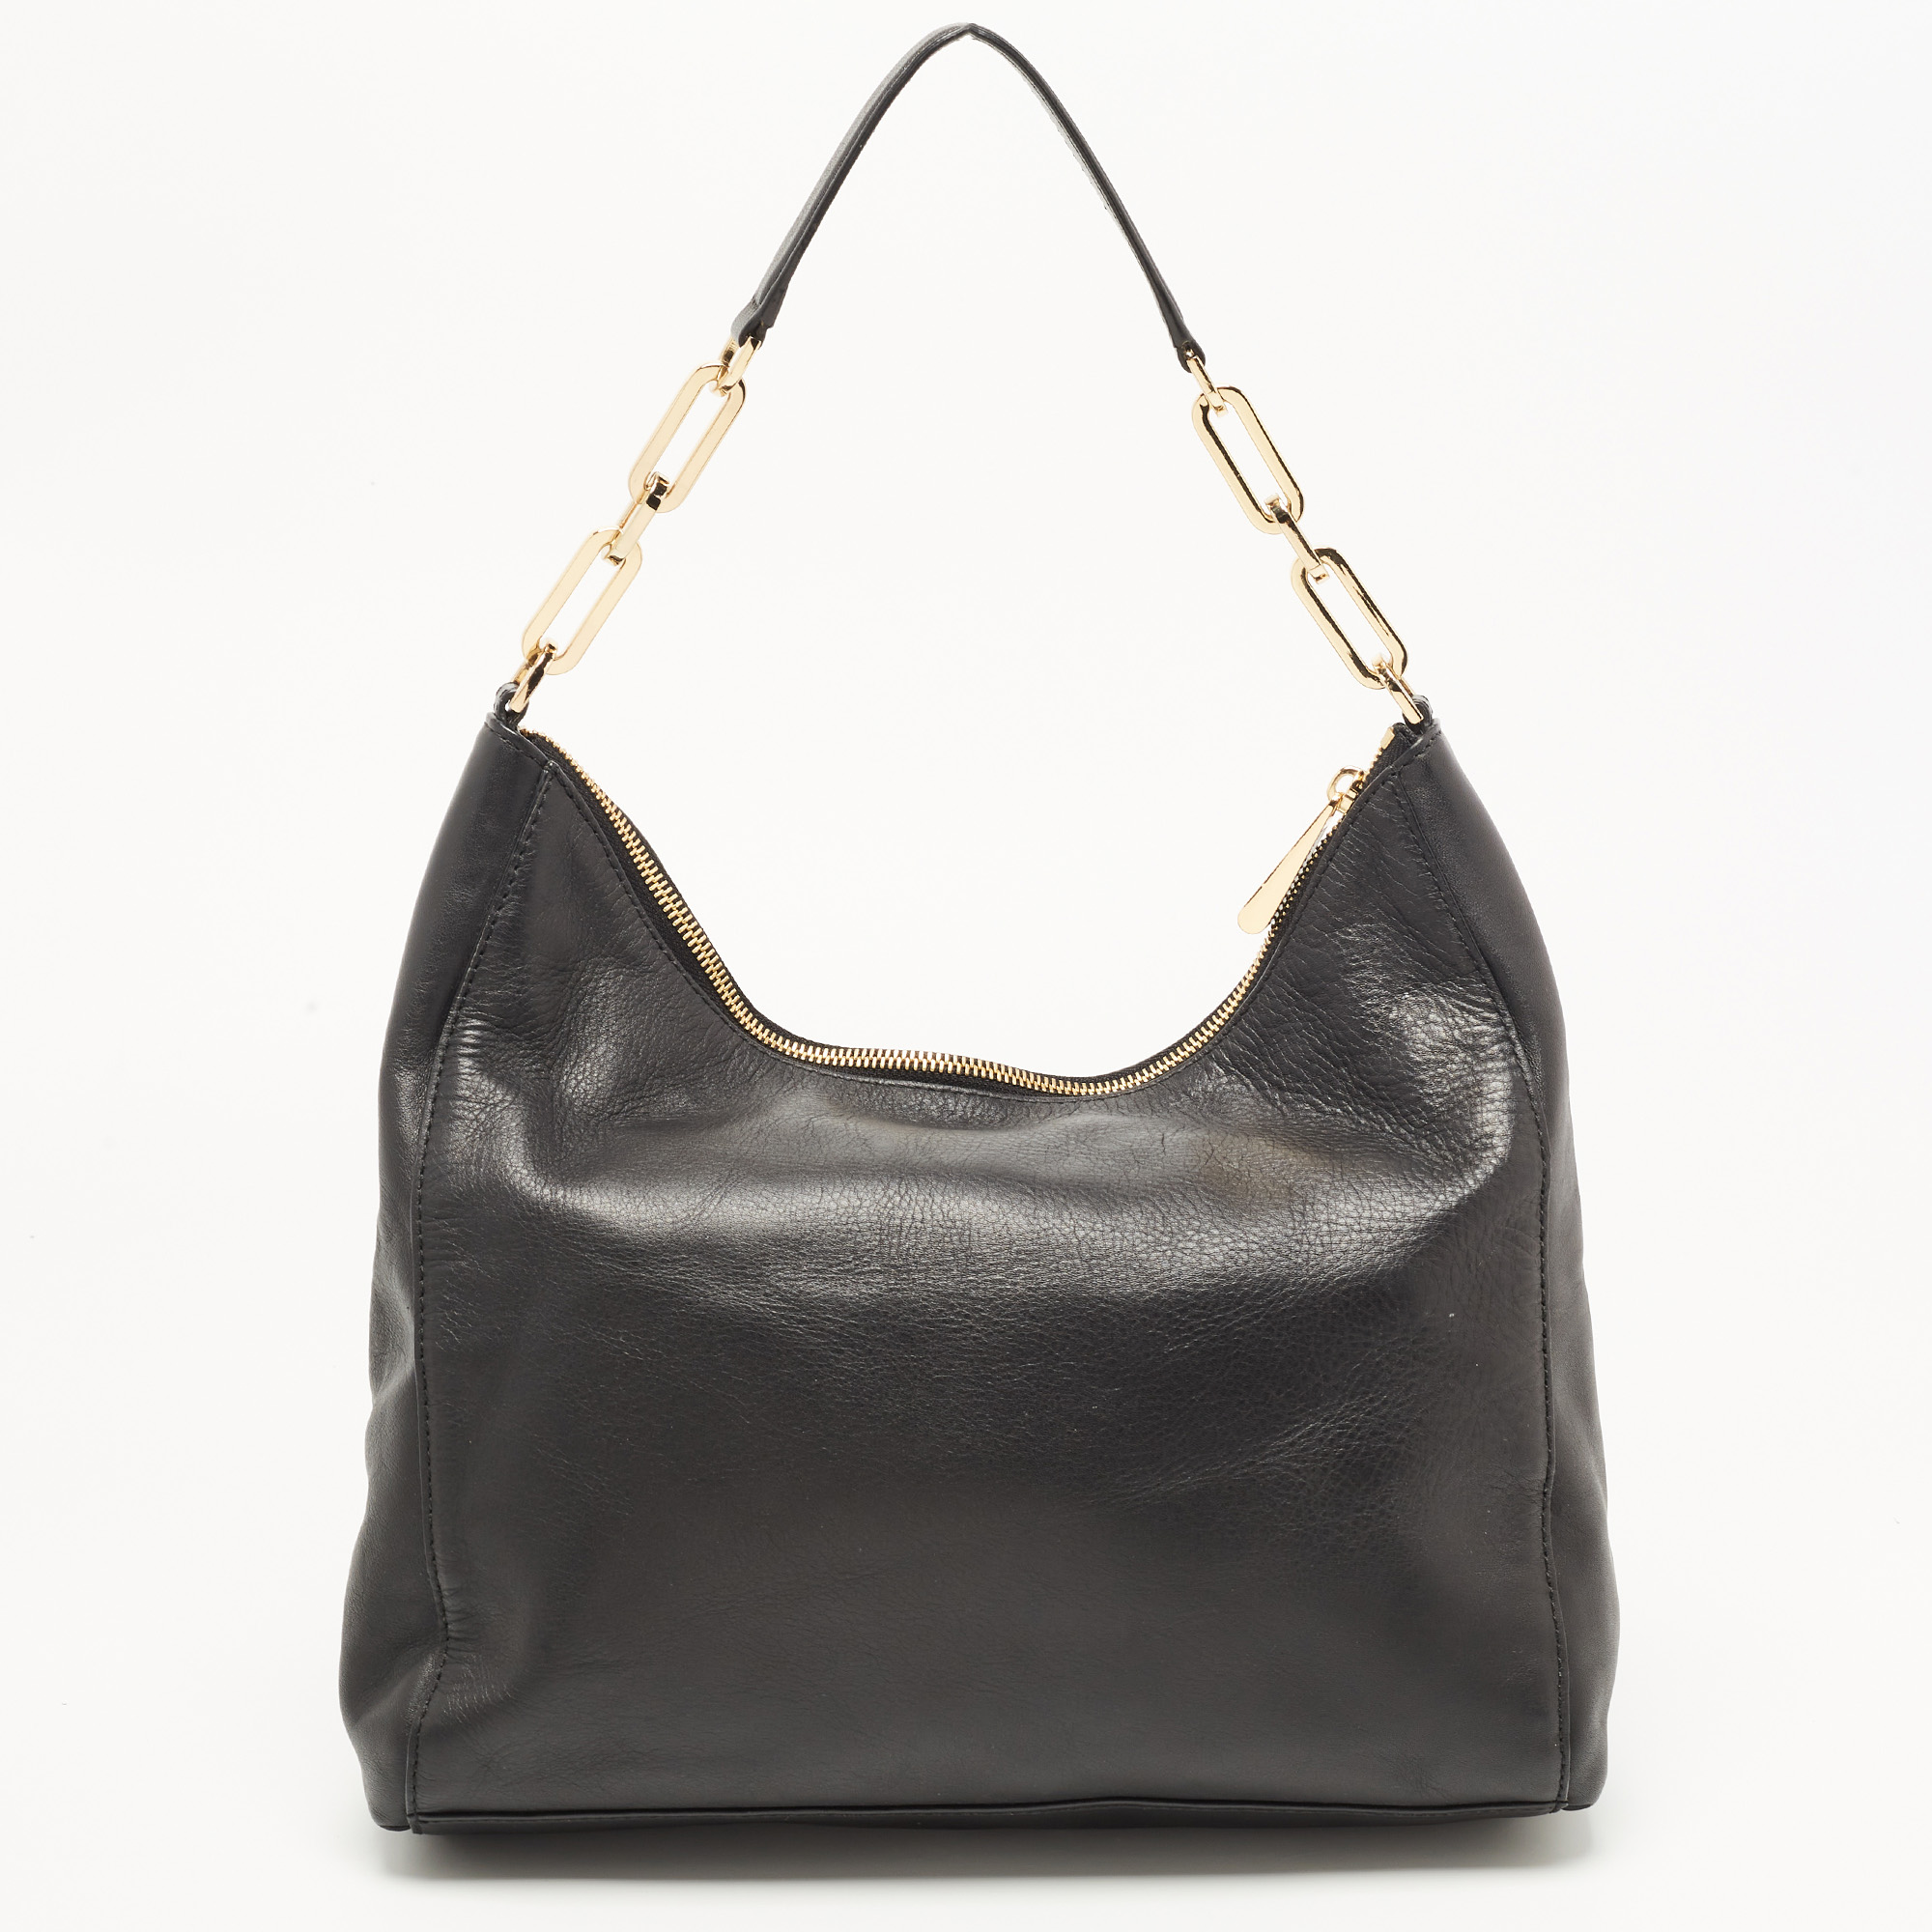 MICHAEL Michael Kors Black Leather Matilda Shoulder Bag